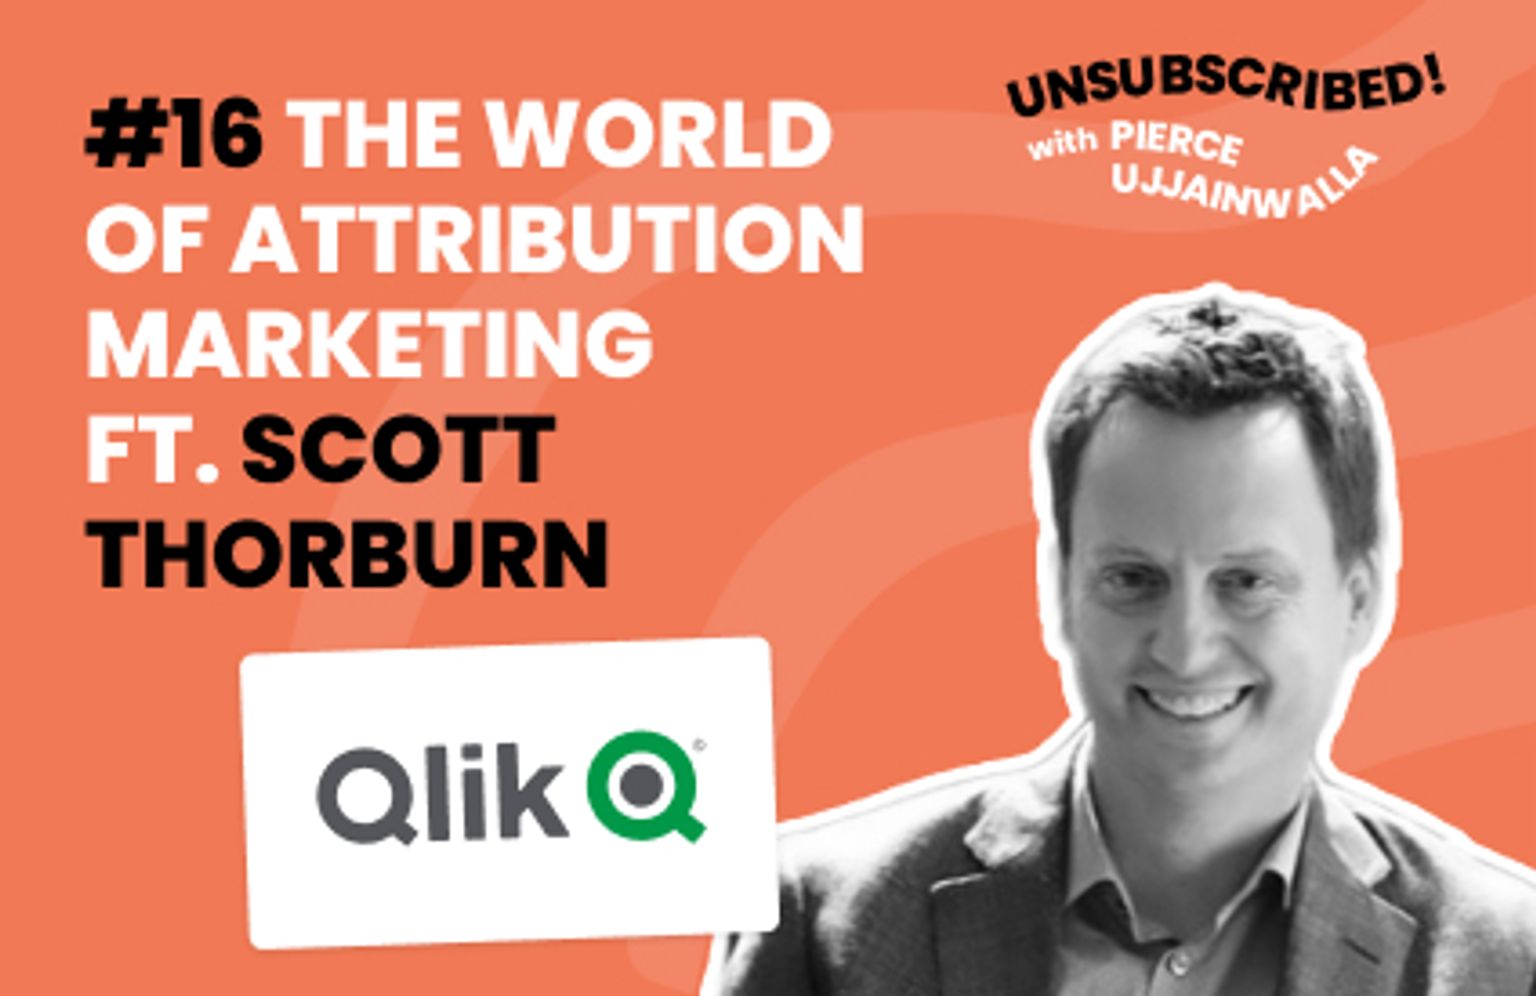 #16 The world of attribution marketing ft. Scott Thorburn, Qlik